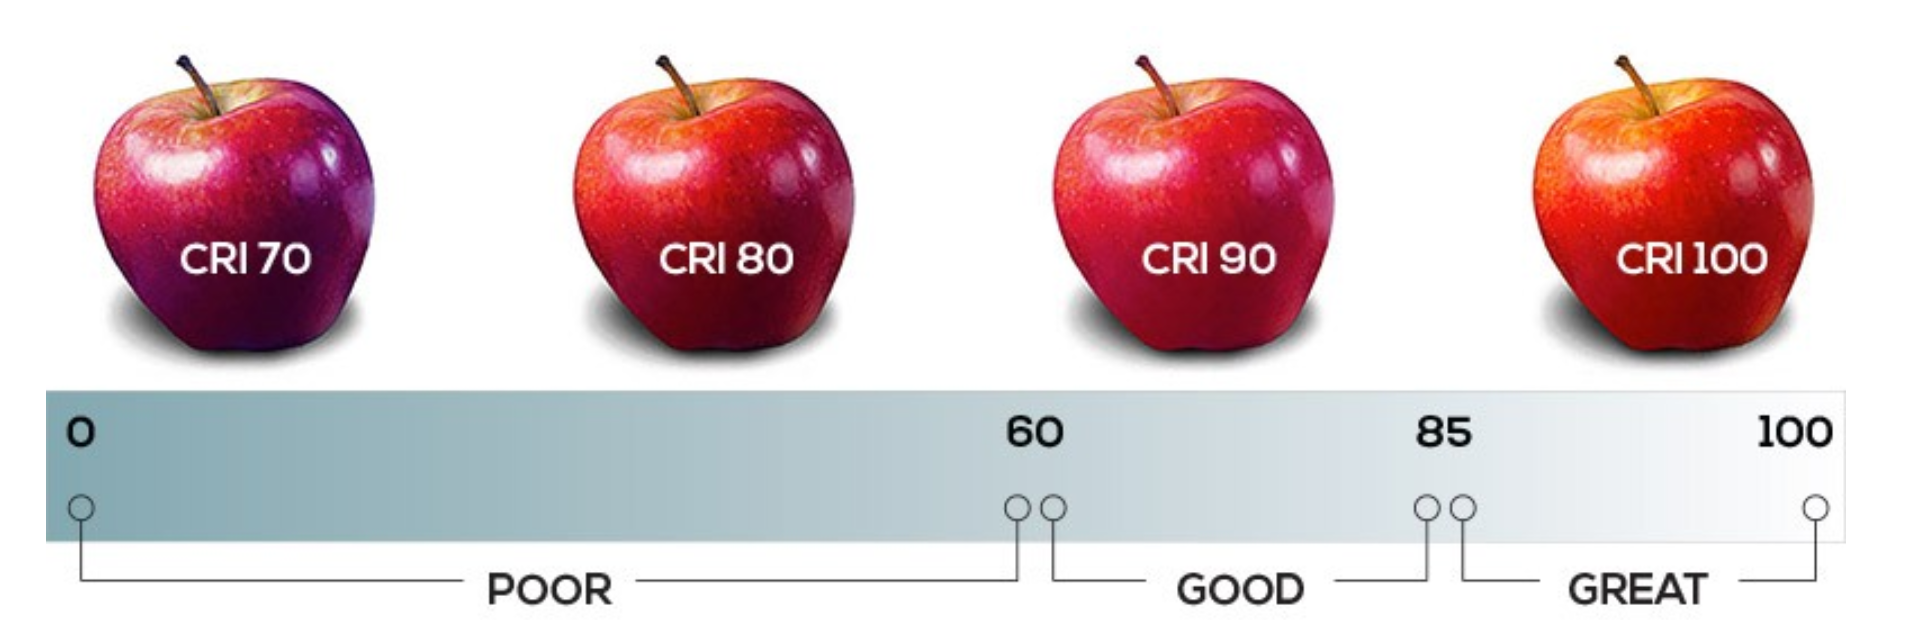 Цветопередача источников света. CRI 100. CRI 90. Индекс цветопередачи CRI. Индекс цветопередачи светодиодов.